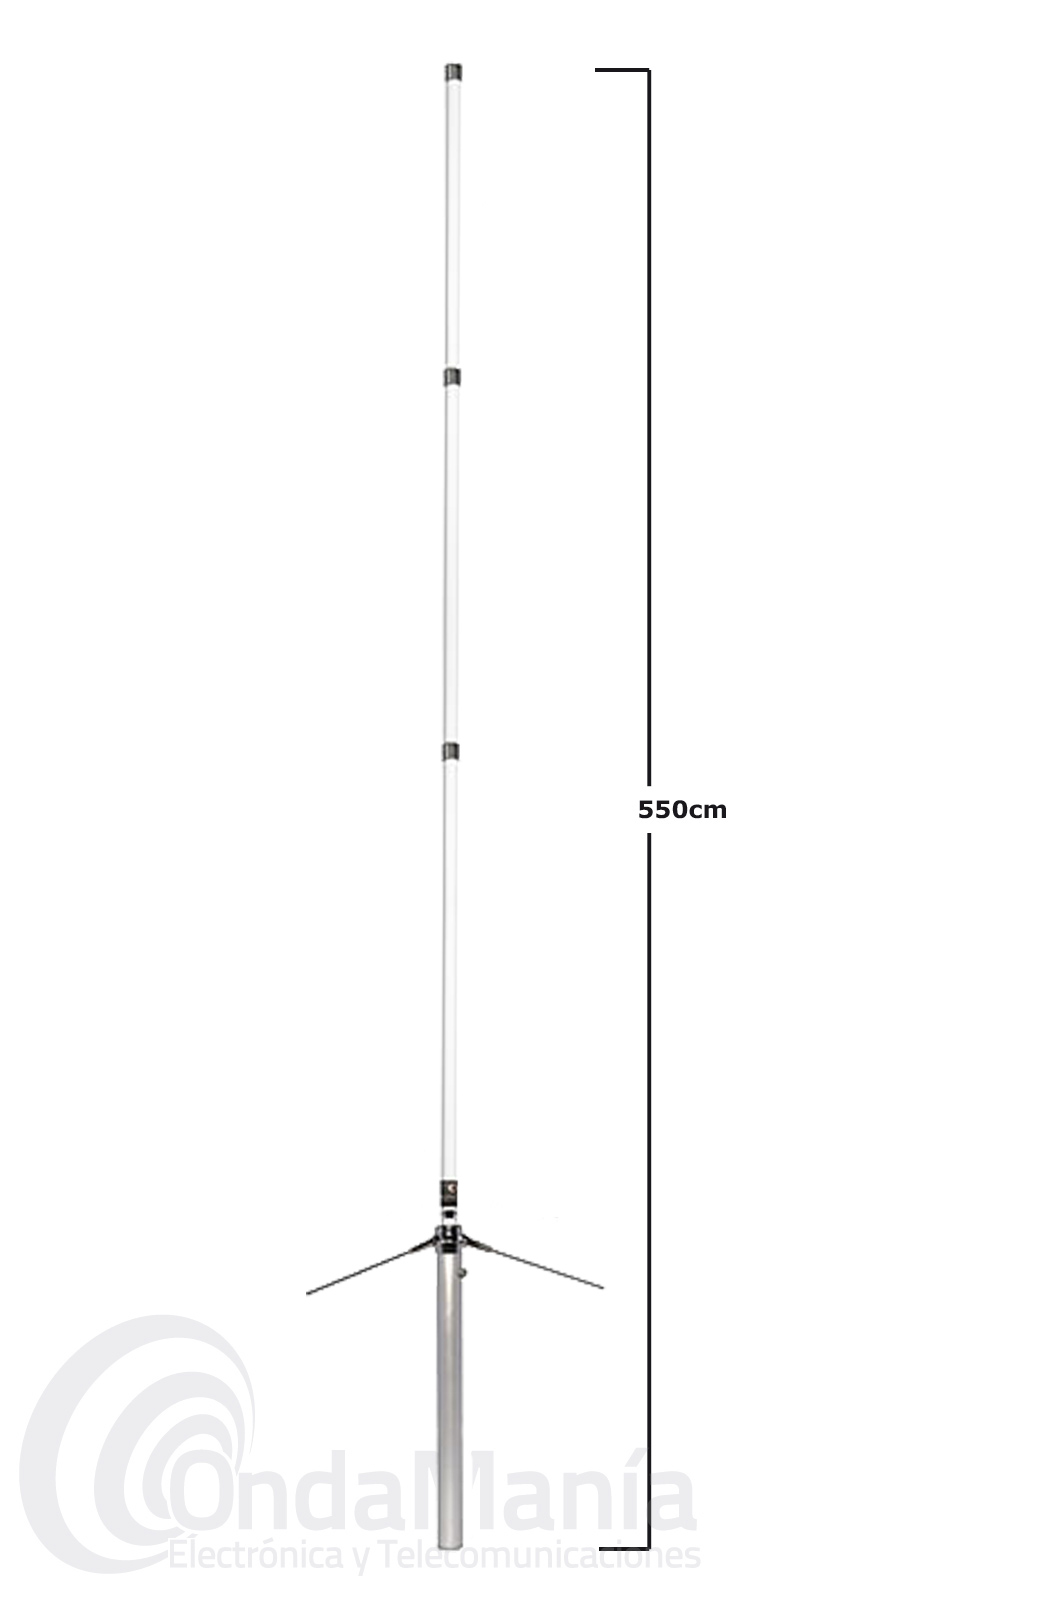 Walkie Talkie Doble banda Antena Externa Mag base de montaje 144-430 Mhz 37cm de longitud 